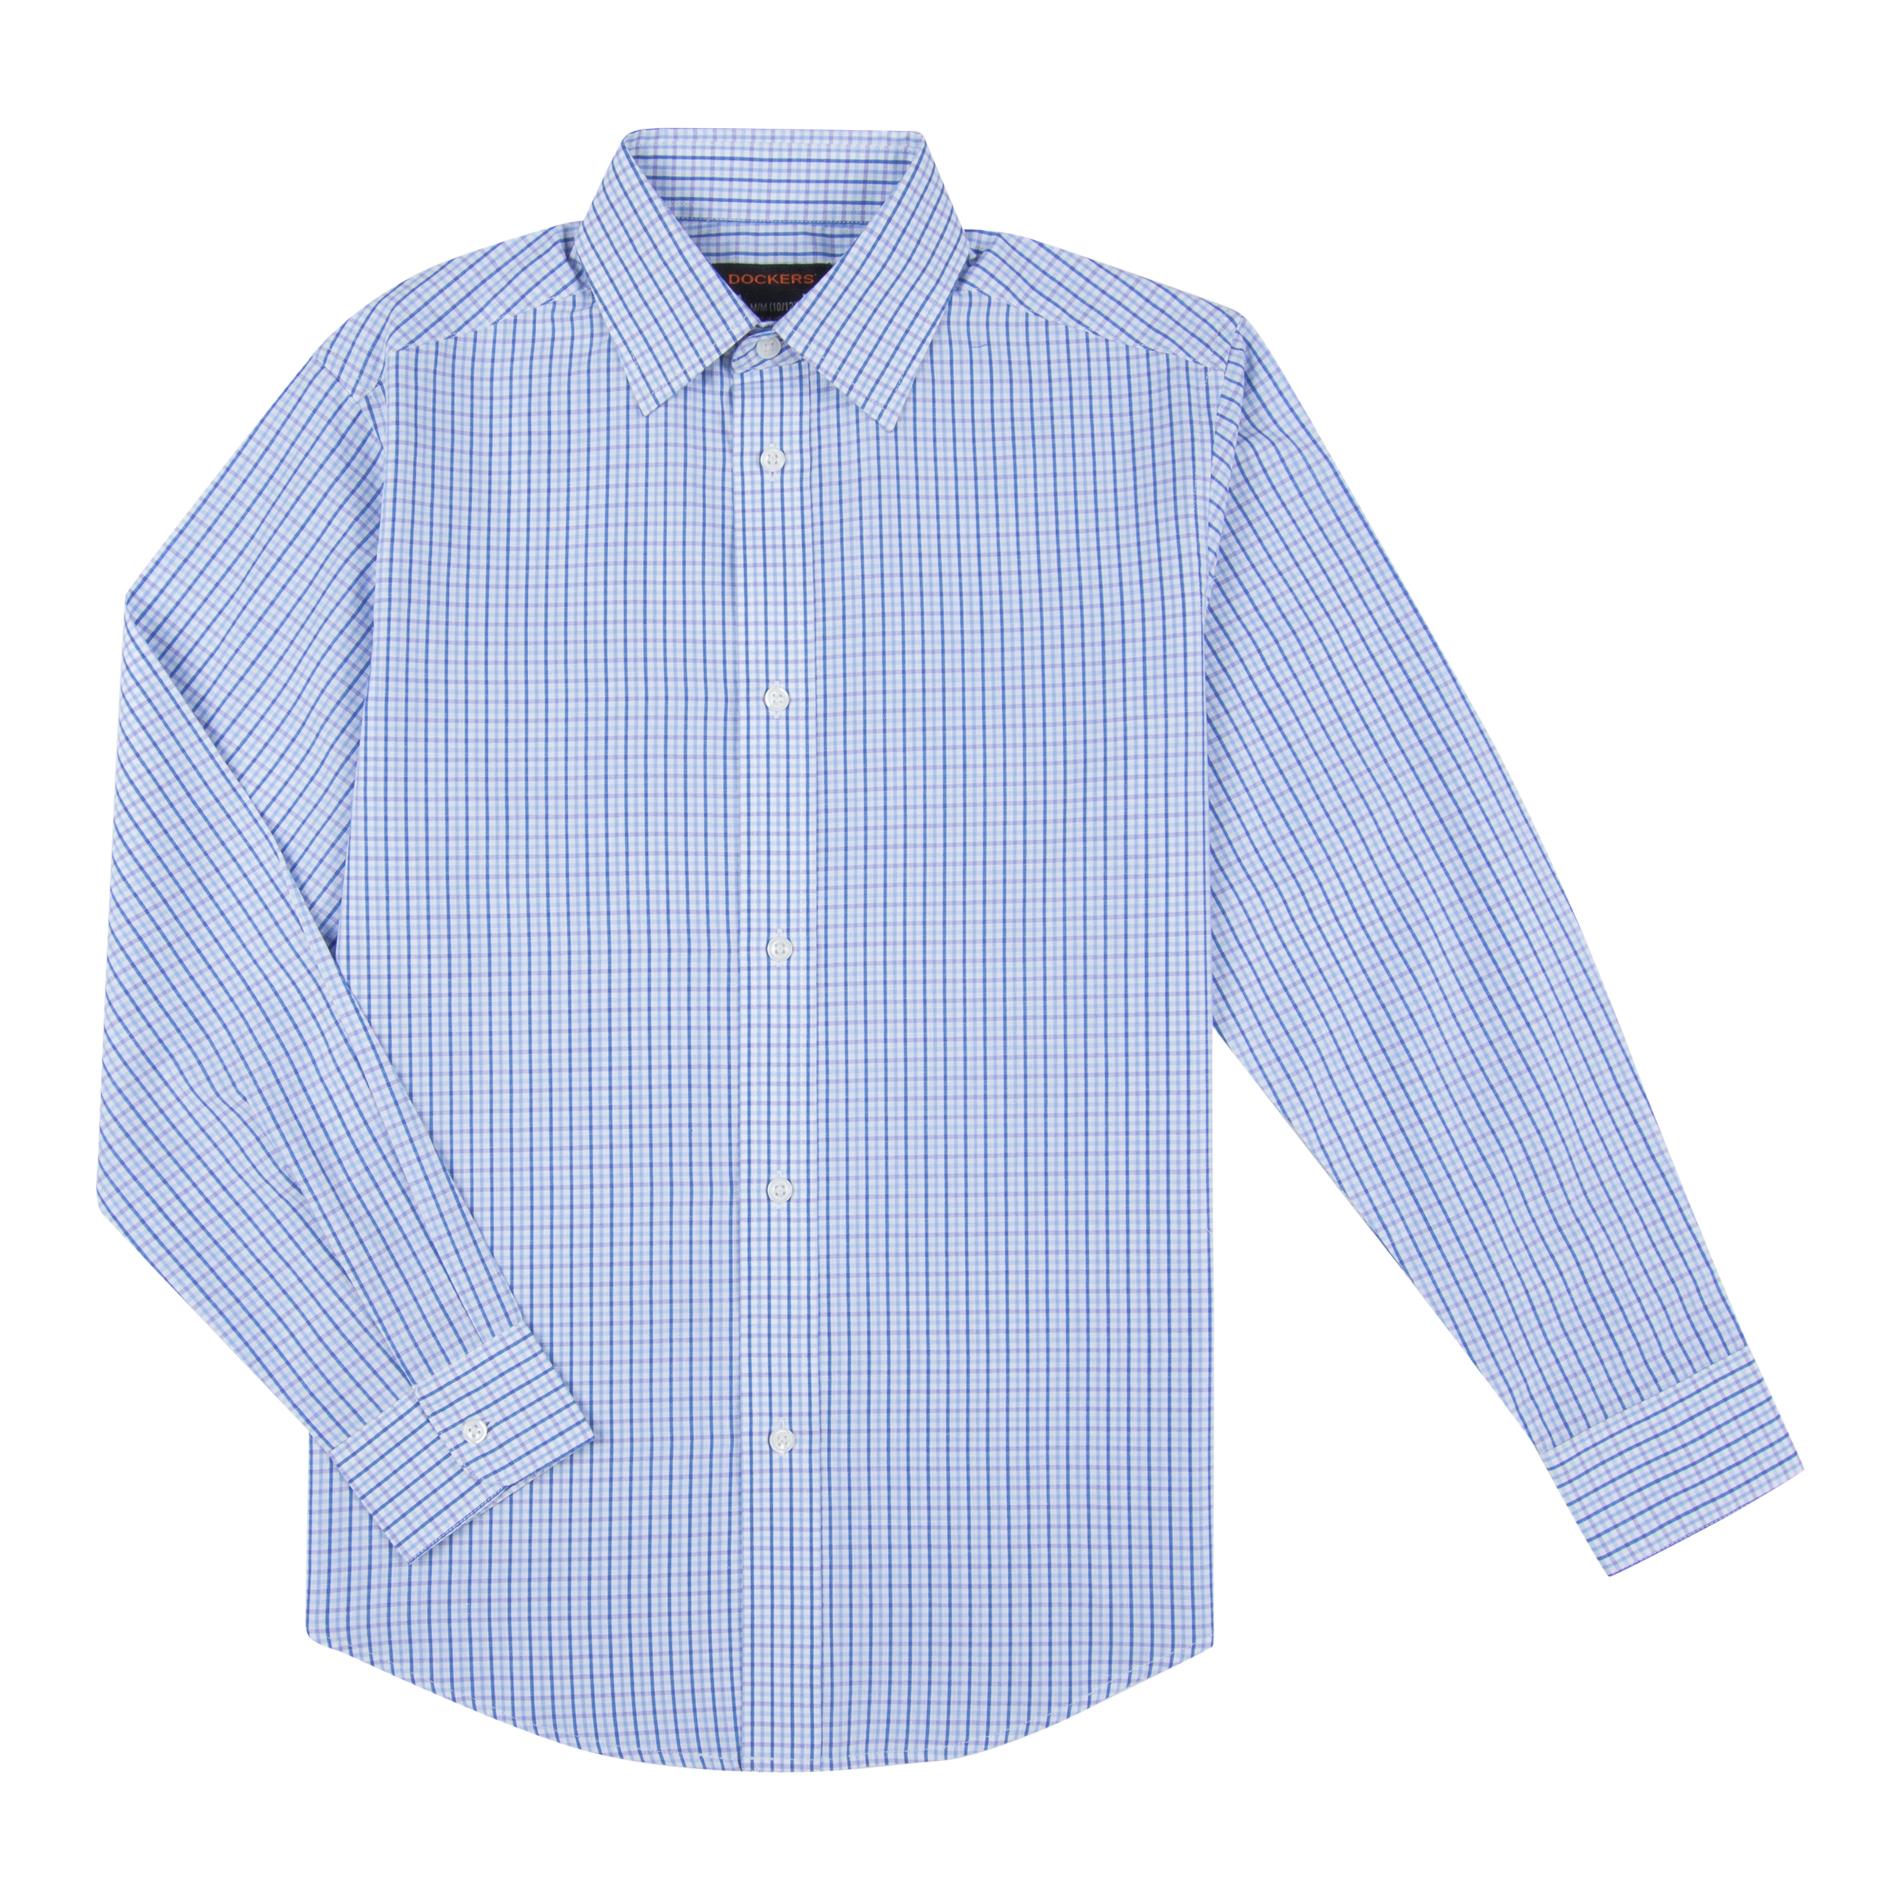 Dockers Boys' Button-Front Shirt - Checkered